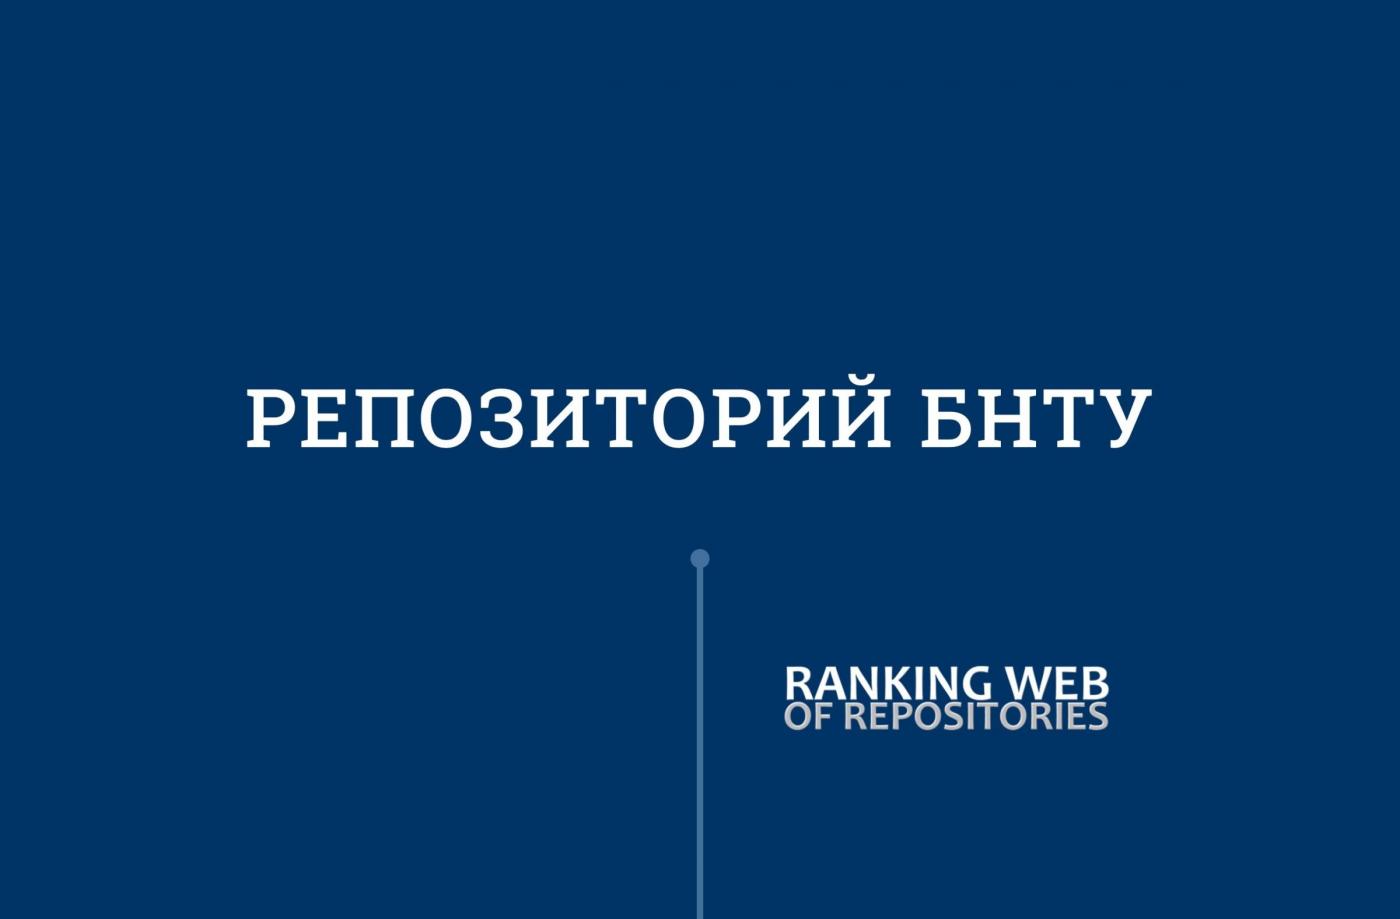 Репозиторий БНТУ занял 33-е место среди всех репозиториев мира